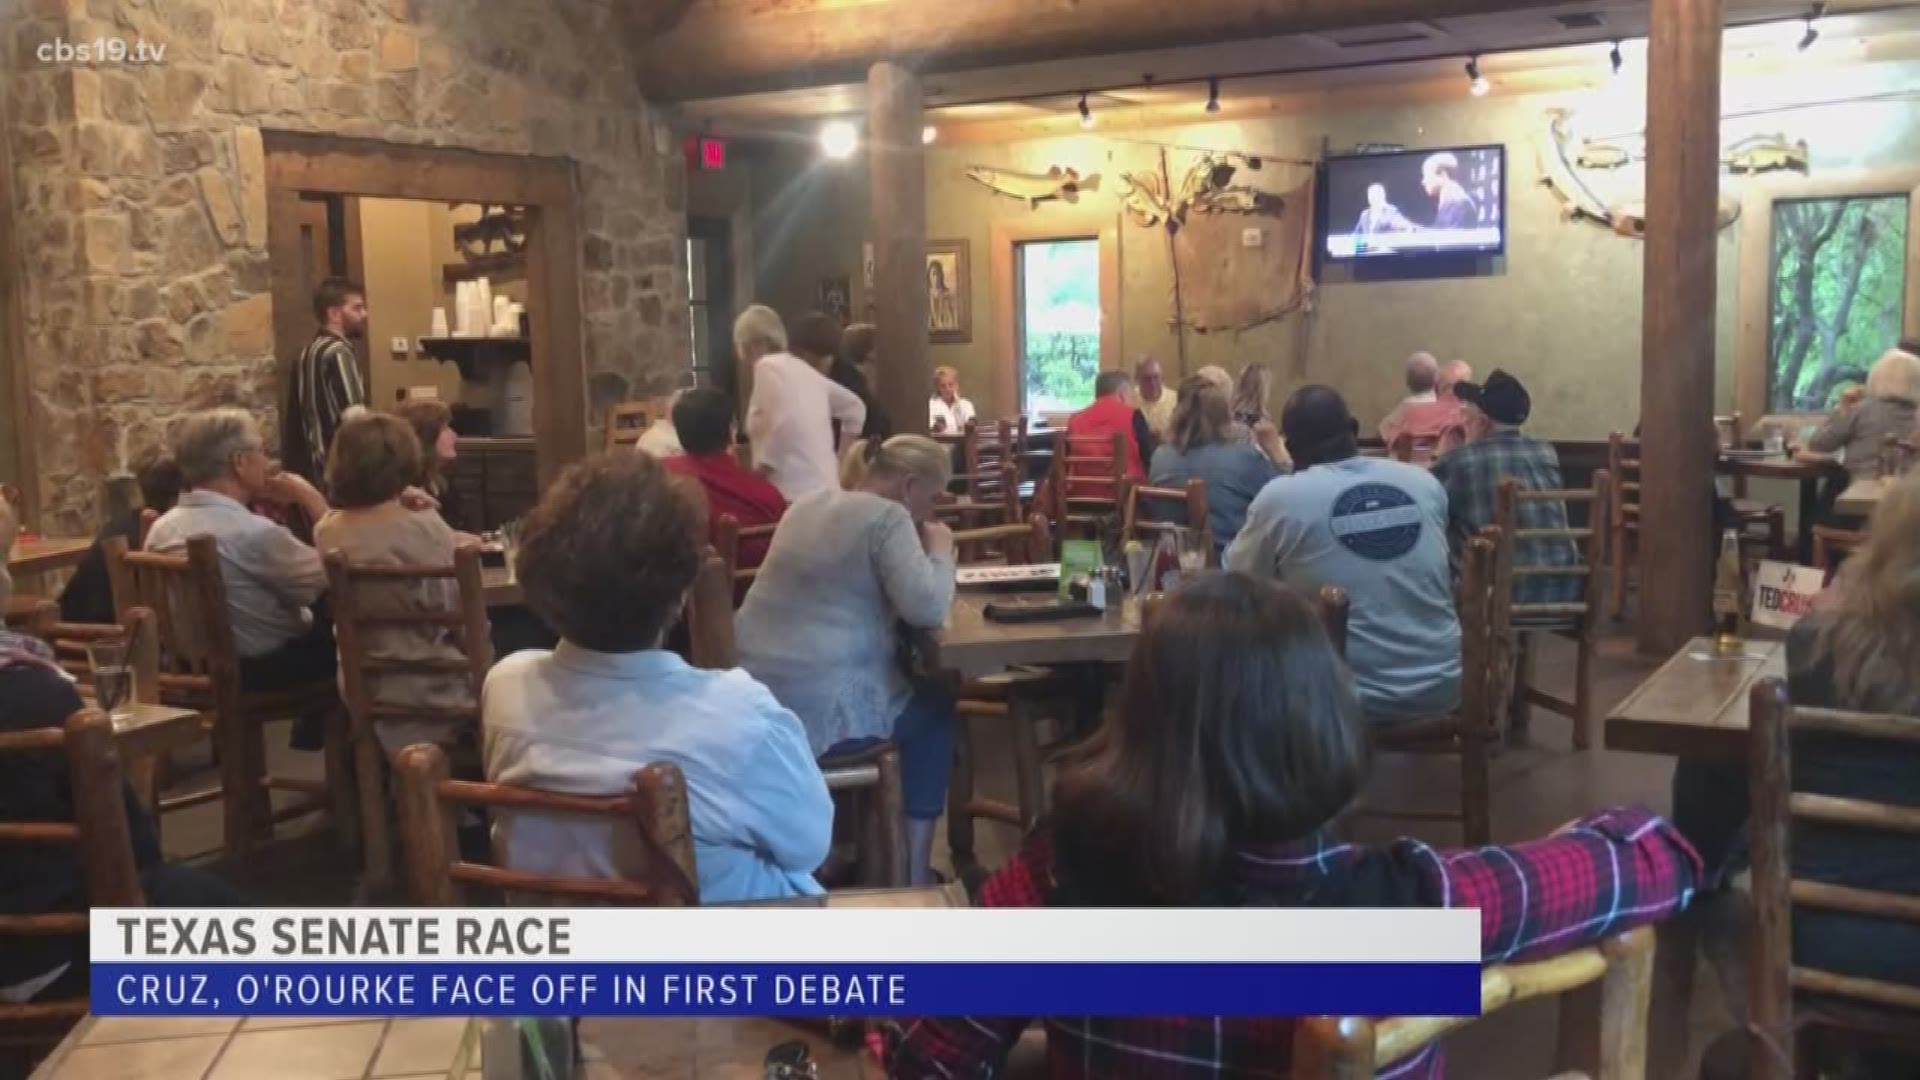 Senator Ted Cruz and Democrat Beto O'Rourke faced off in their first debate.